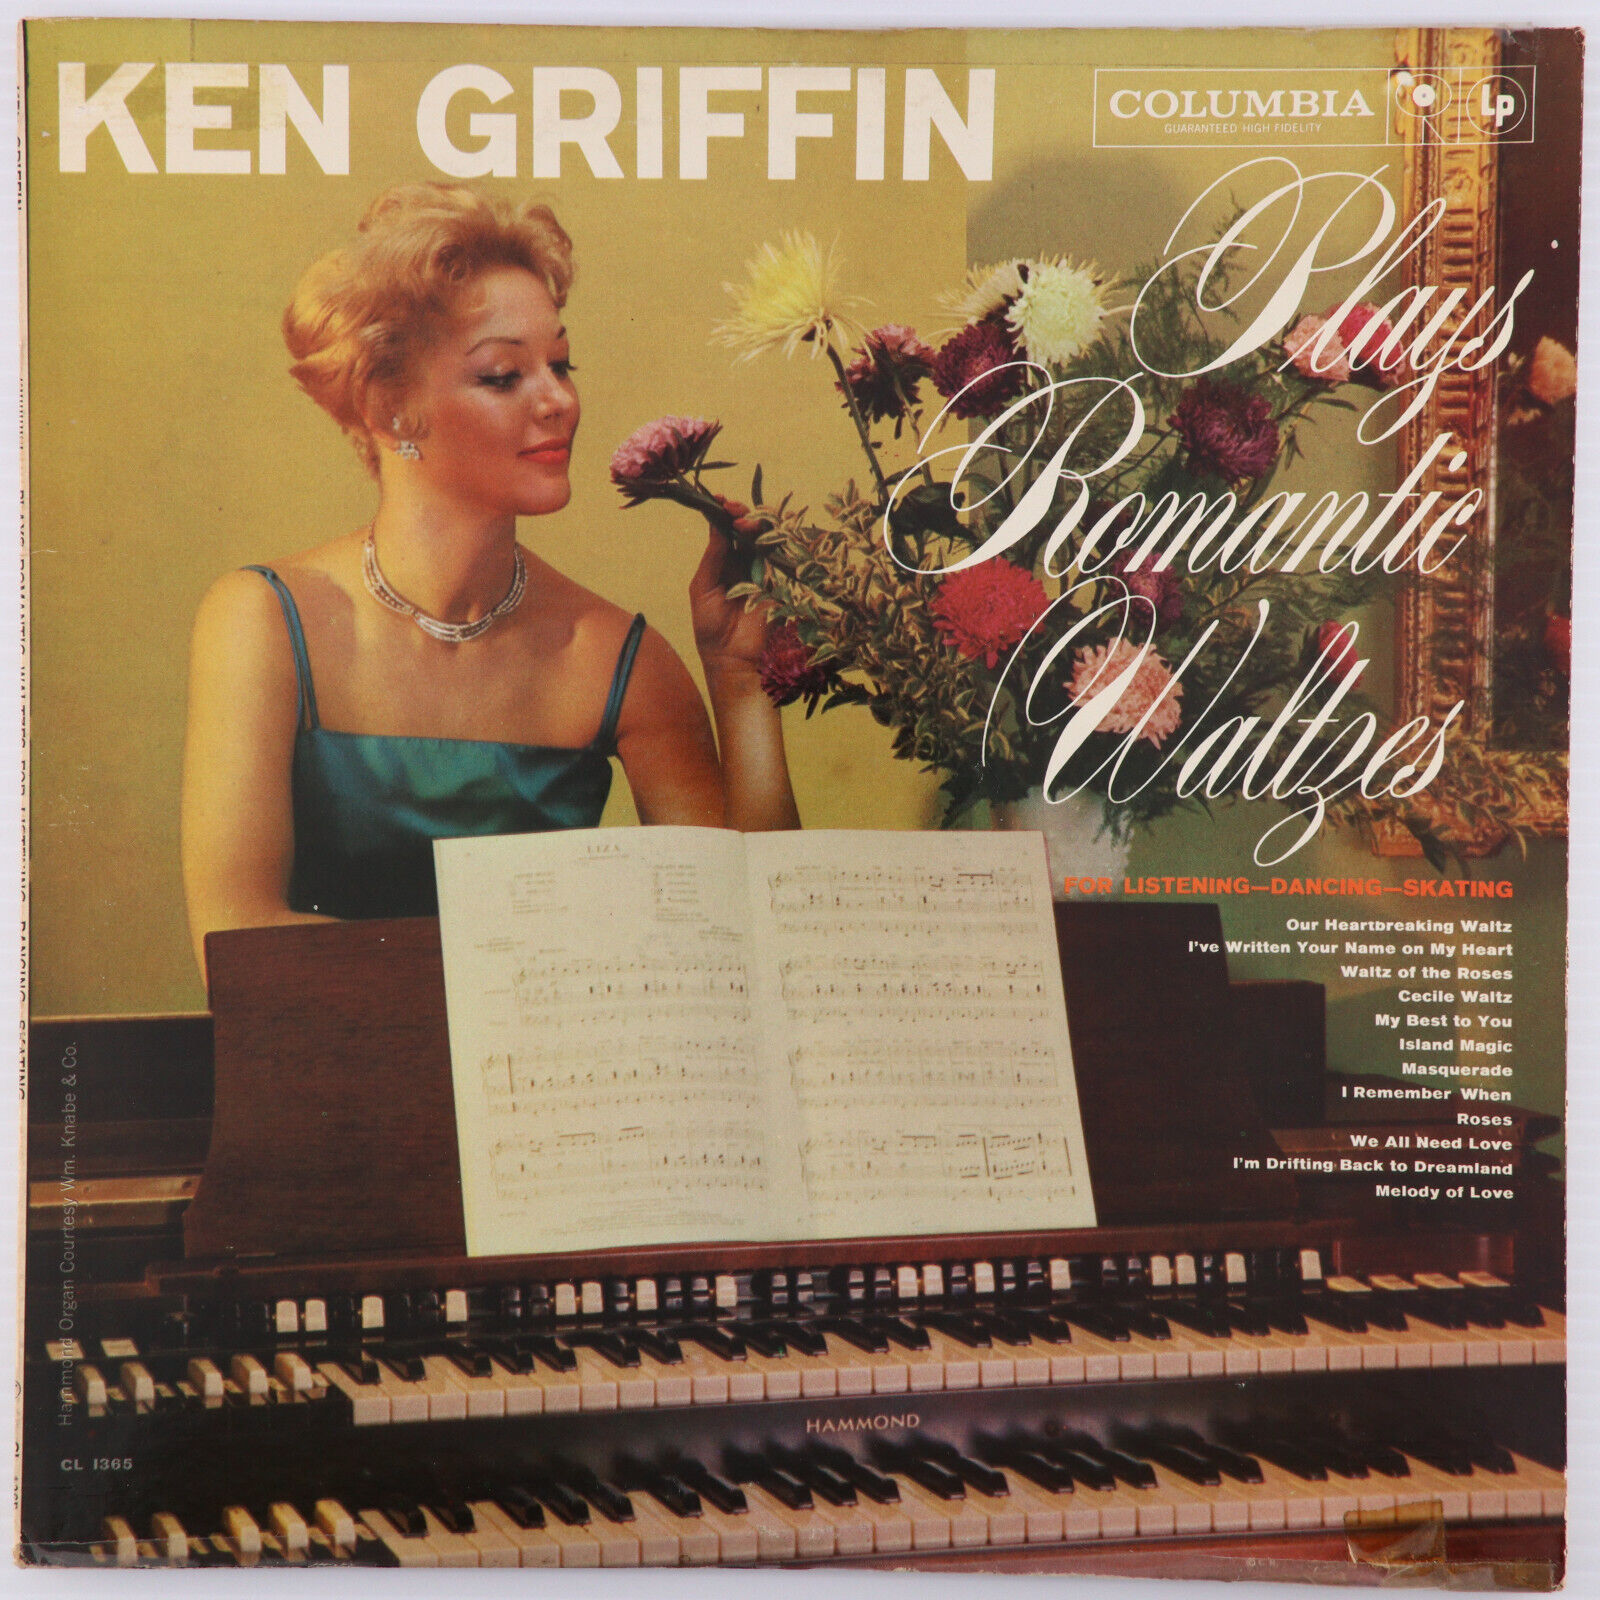 Ken Griffin Plays Romantic Waltzes For Listening, Dancing, Skating - LP CL 1365